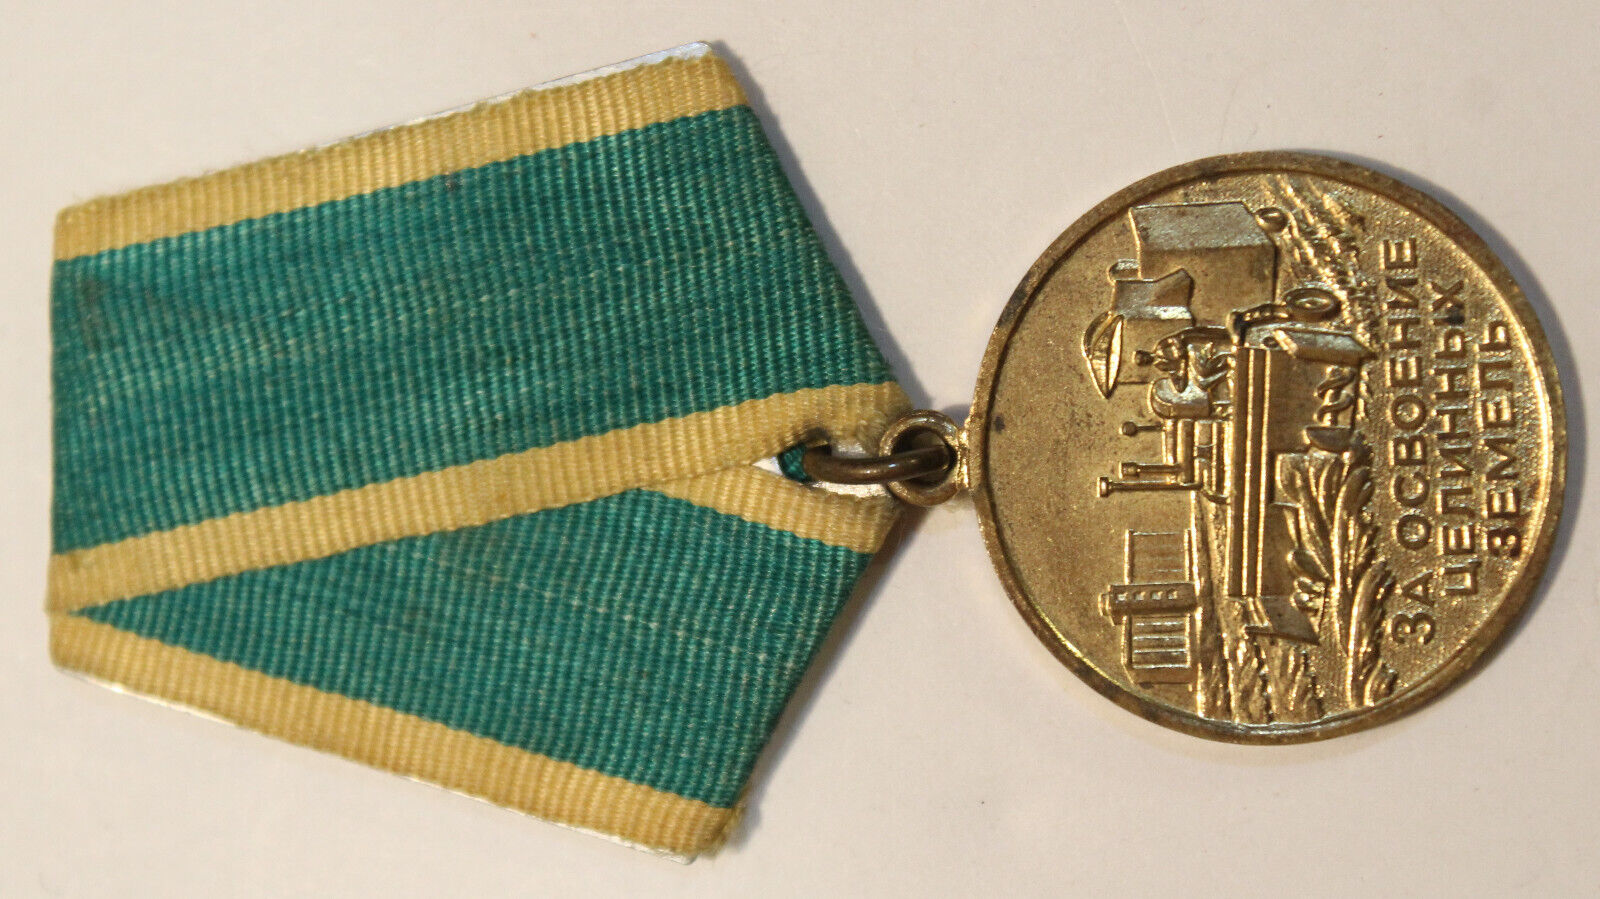 Soviet USSR Russia Medal for Development of Virgin Lands